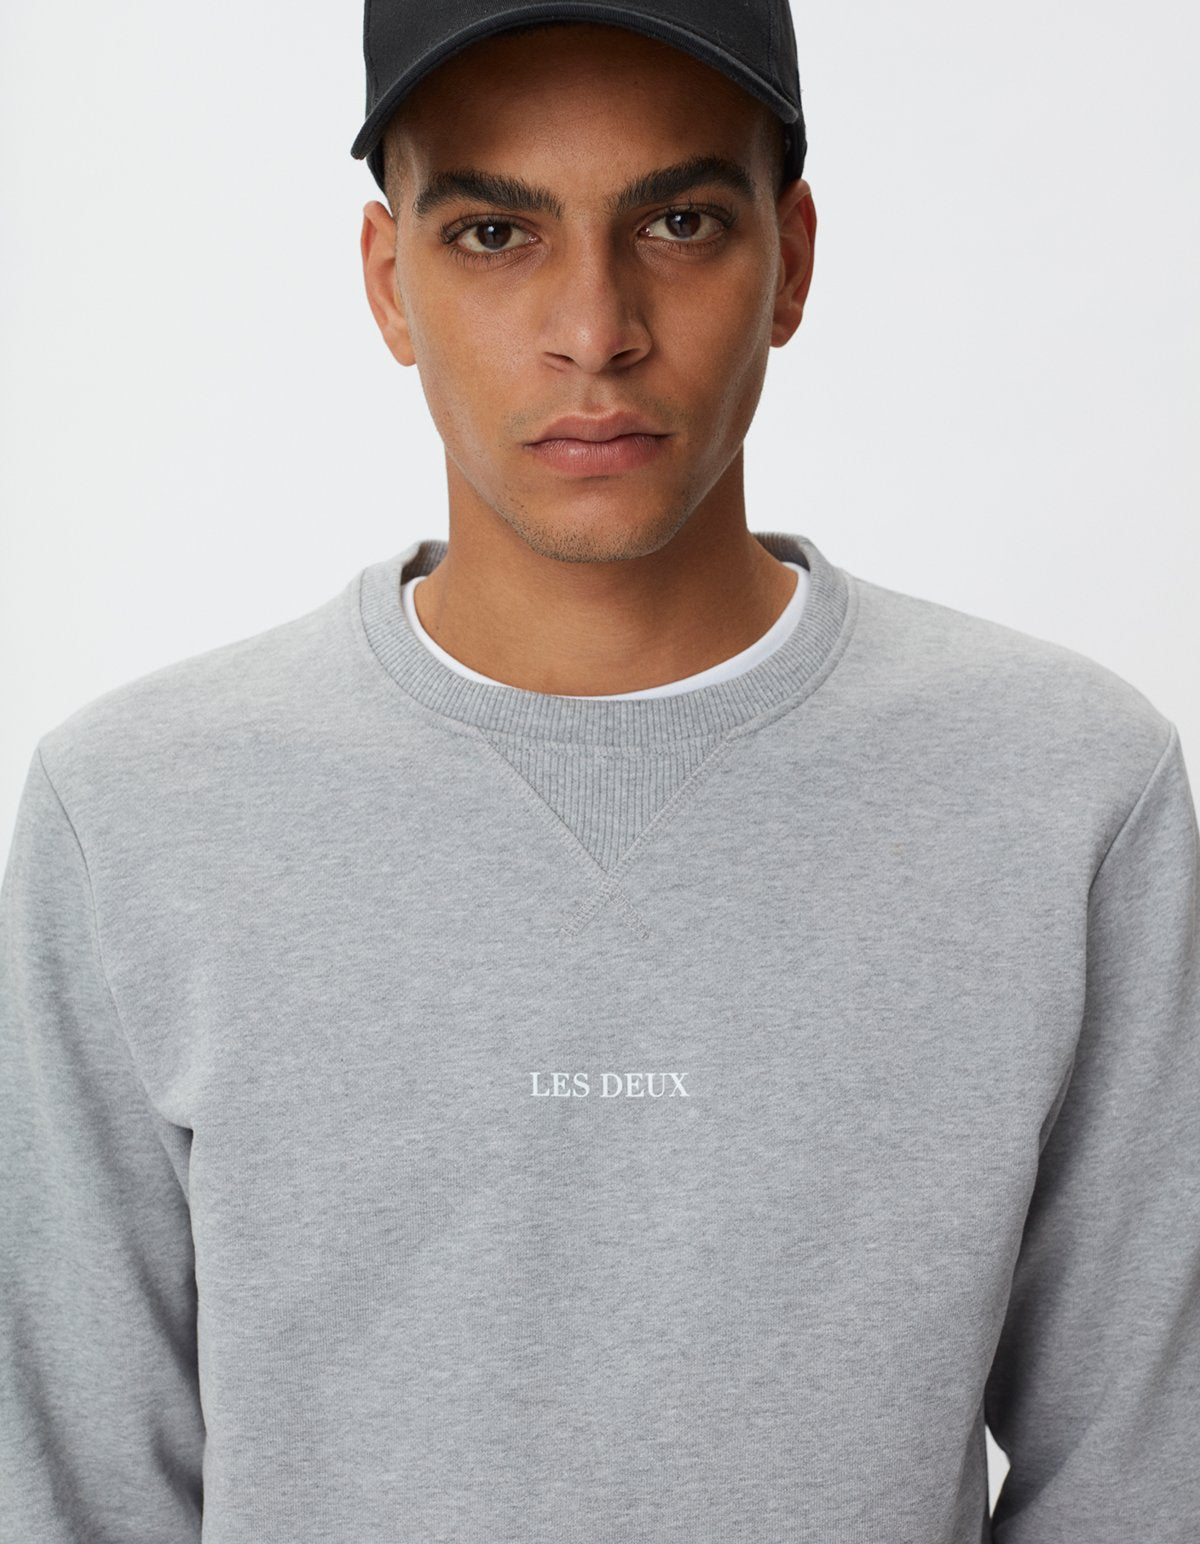 Lens Sweatshirt - Light Grey Melange/White